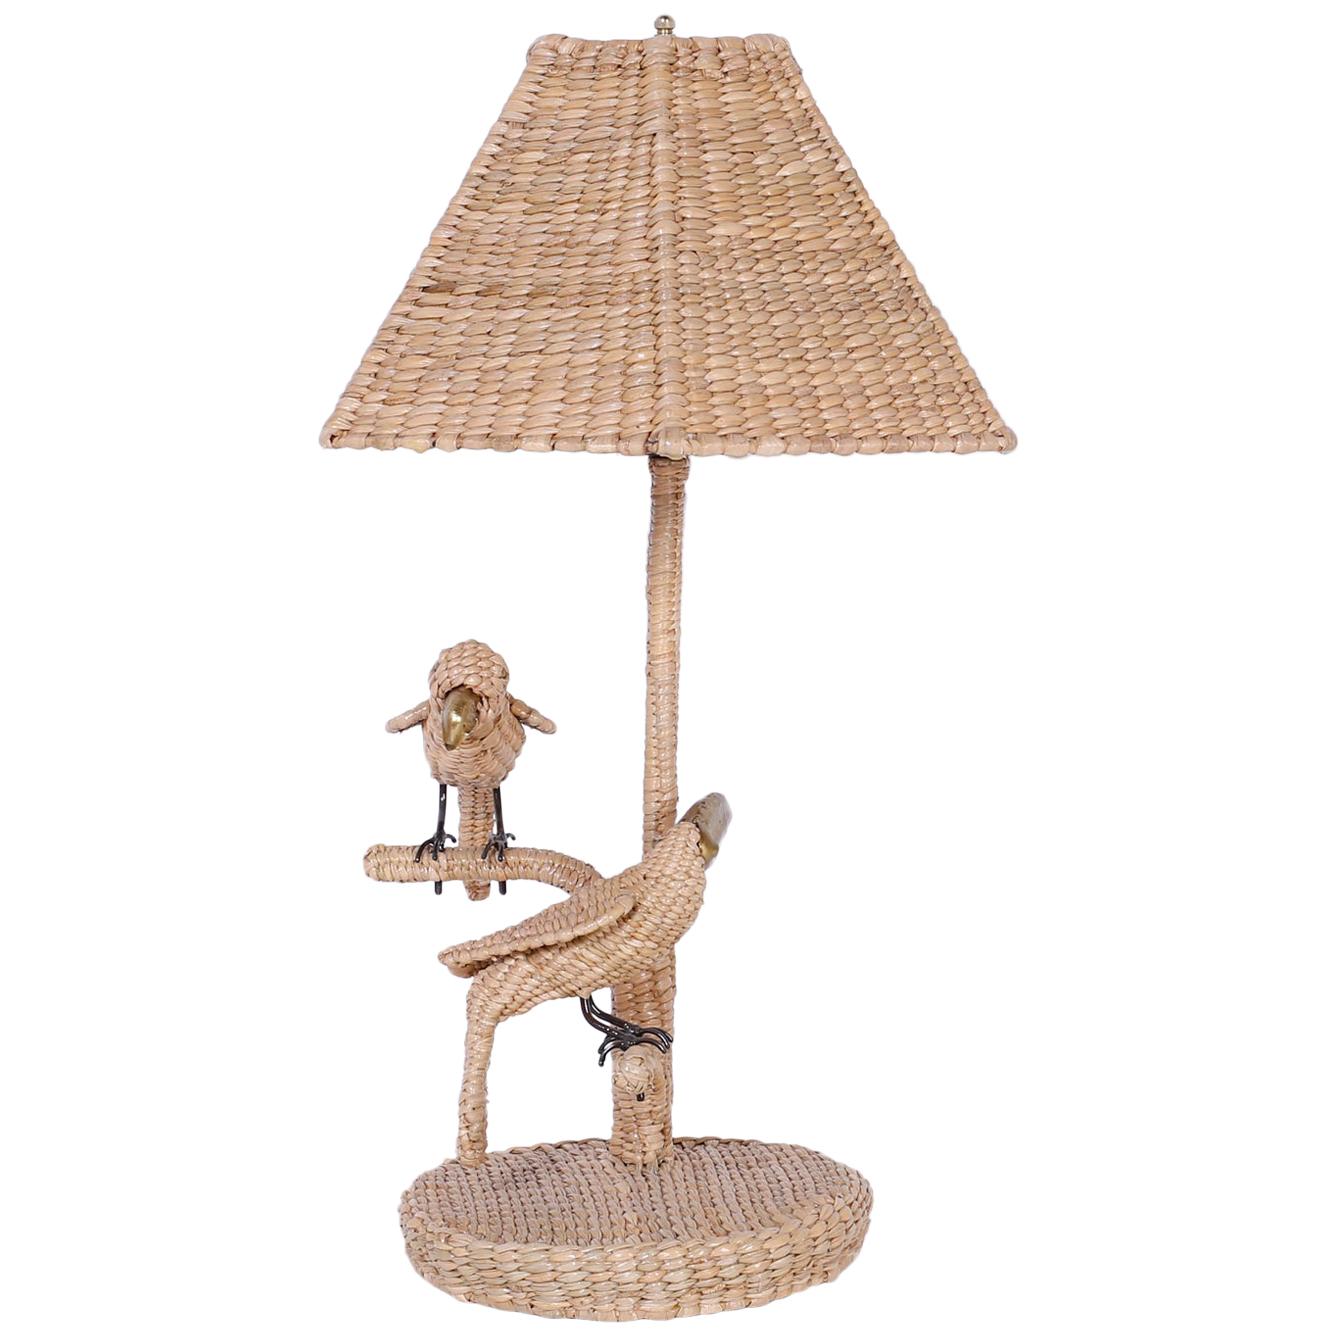 Mario Torres Wicker Parrot and Toucan Bird Table Lamp